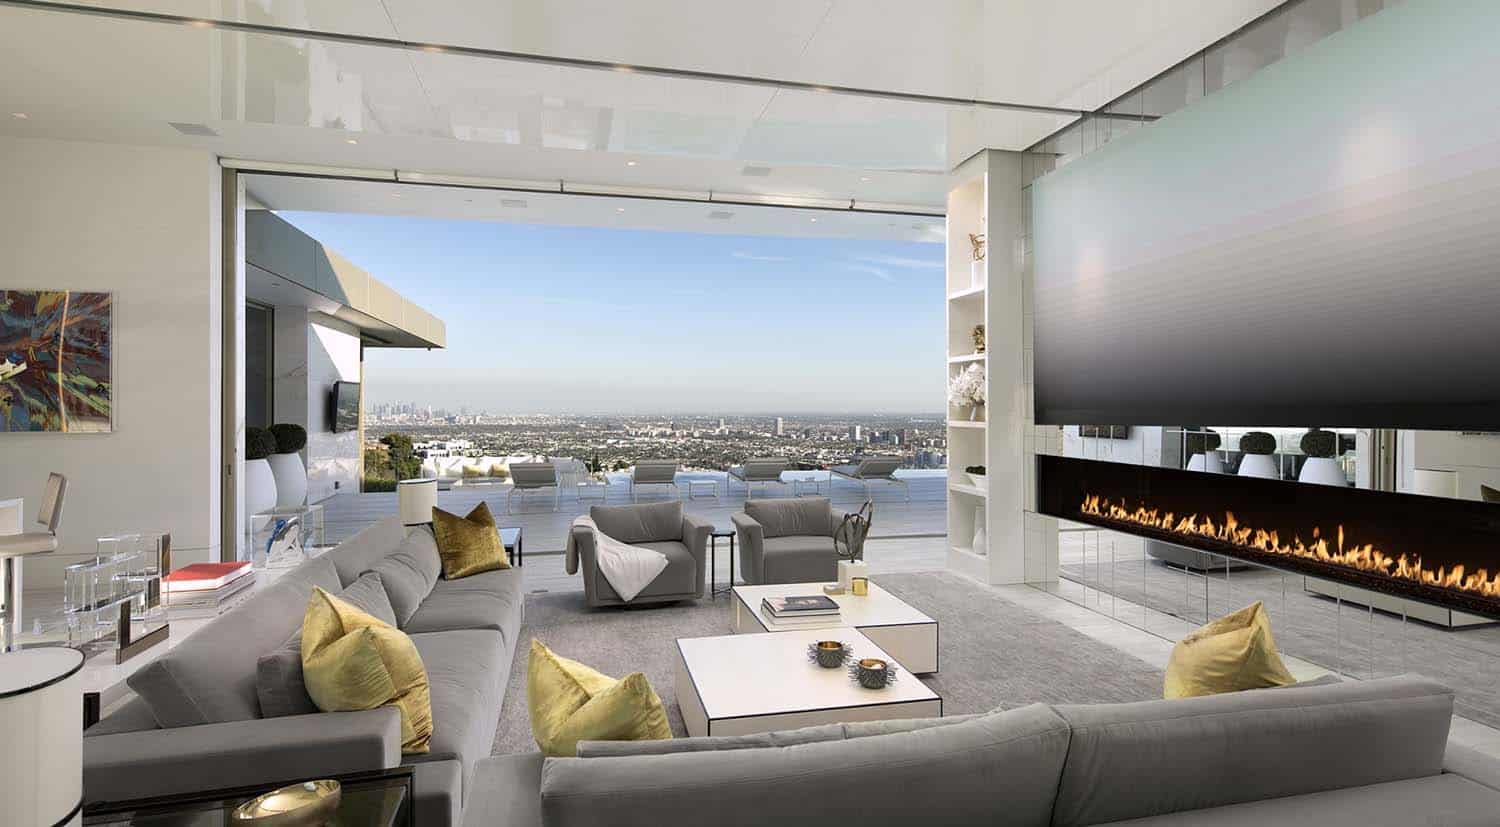 Opulent modern estate offers impressive views over downtown LA